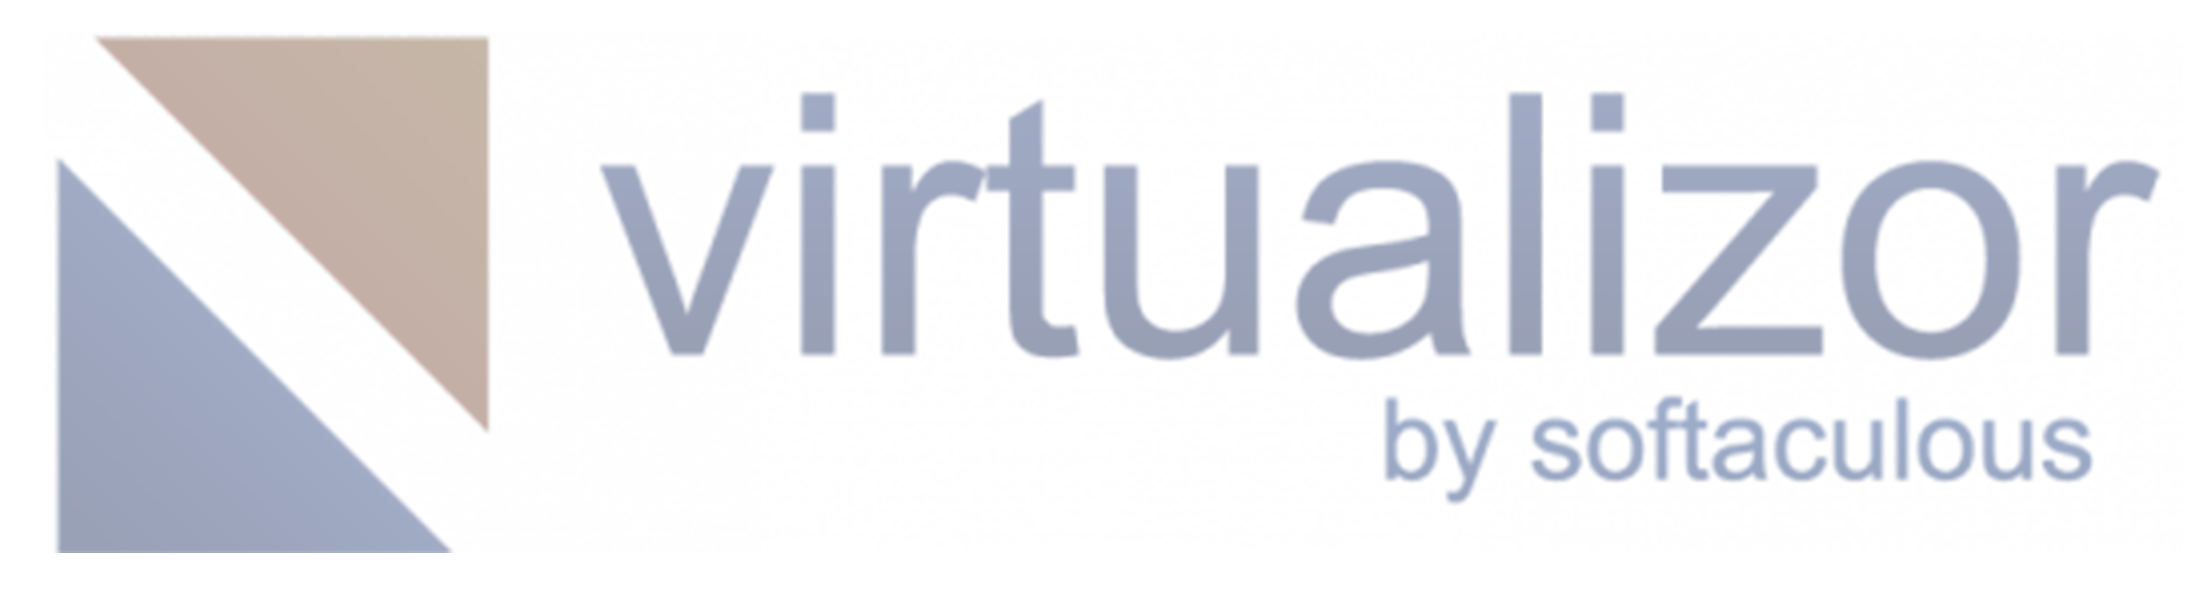 Virtualizor Logo